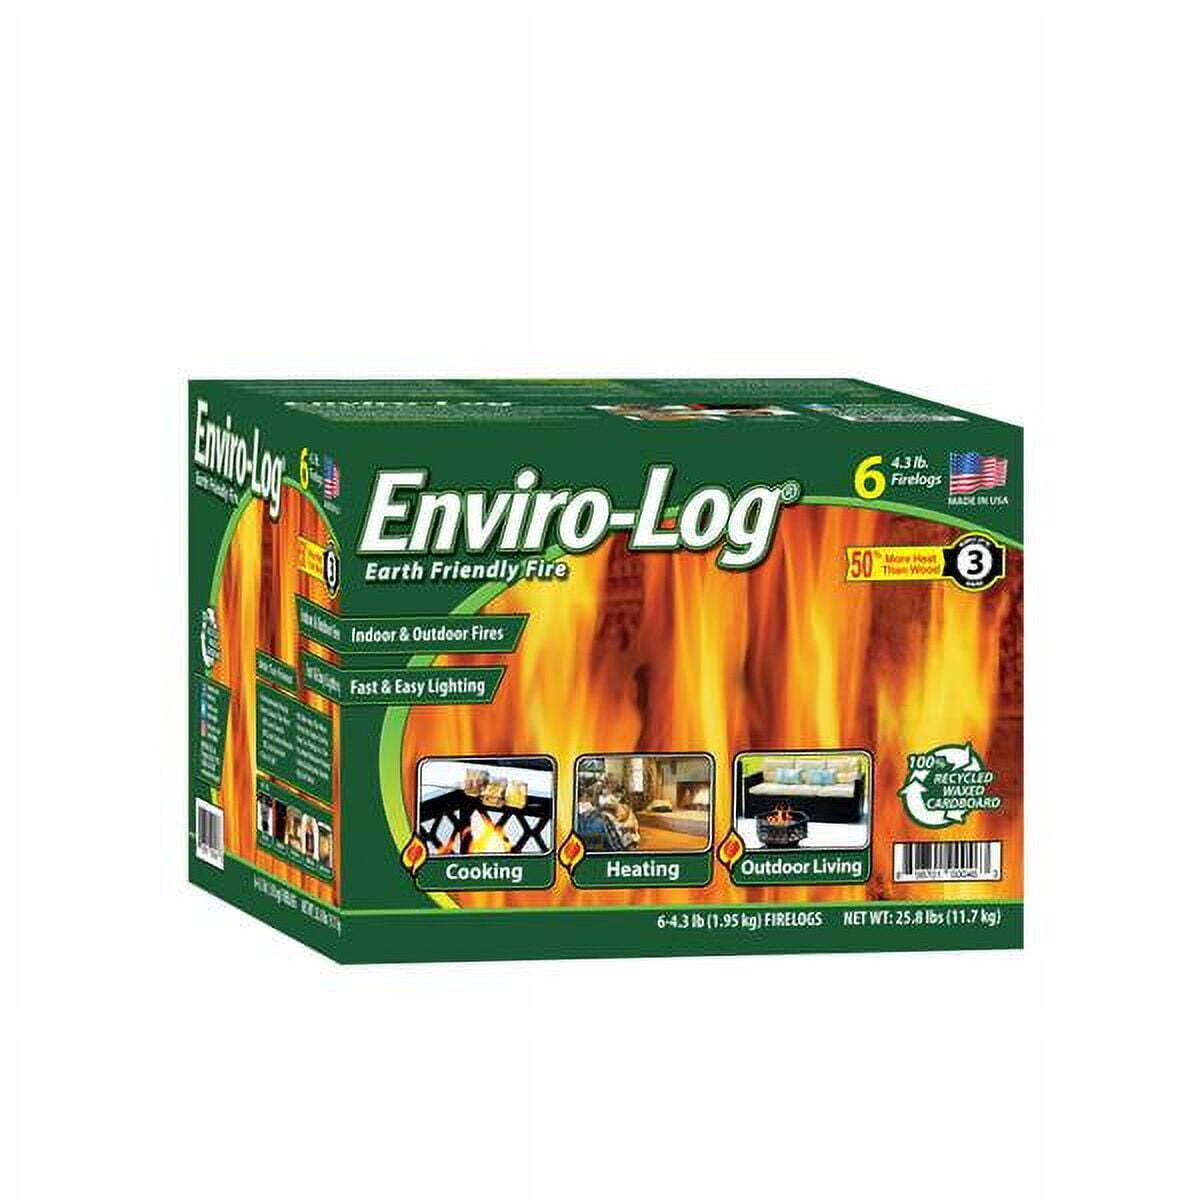 Enviro-Log Indoor and Outdoor Fire Wood, 4.3 lb Firelogs, 25.8 lbs, 6 Count US